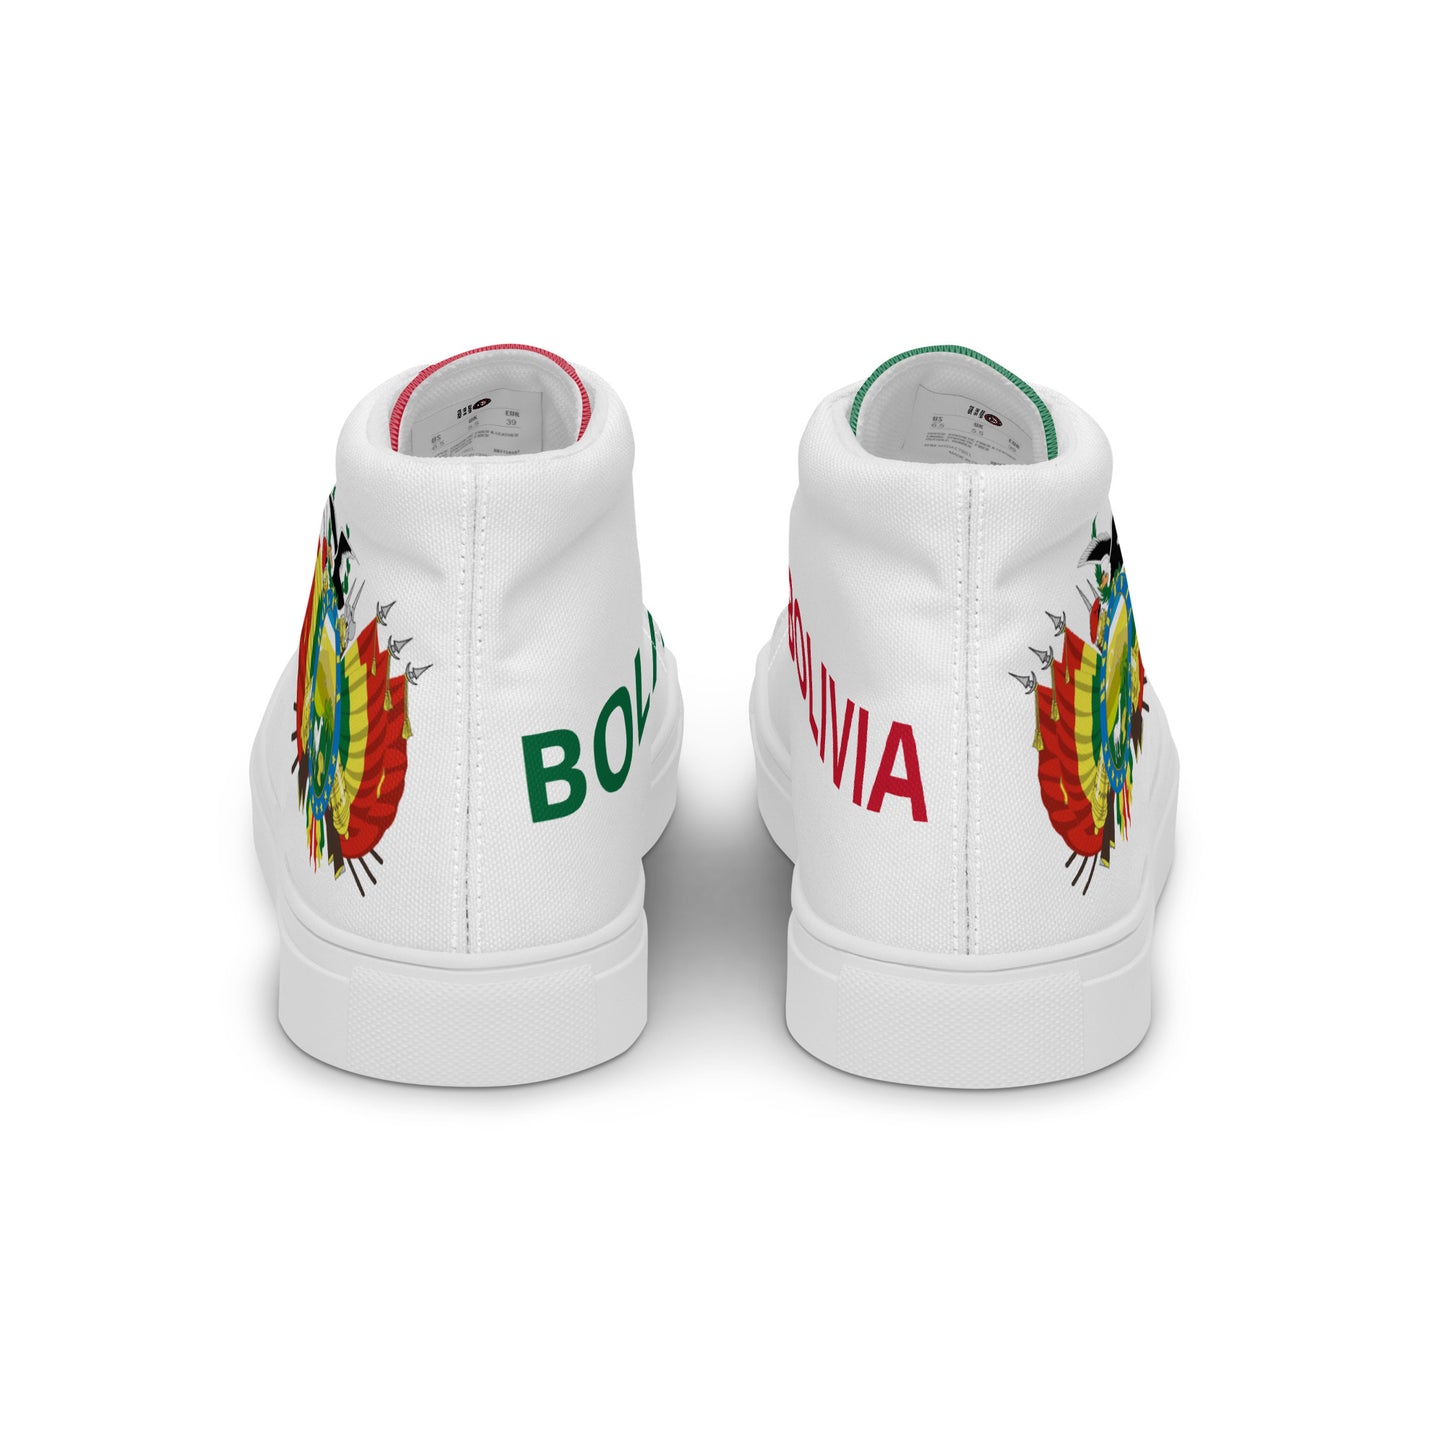 Bolivia - Men - White - High top shoes